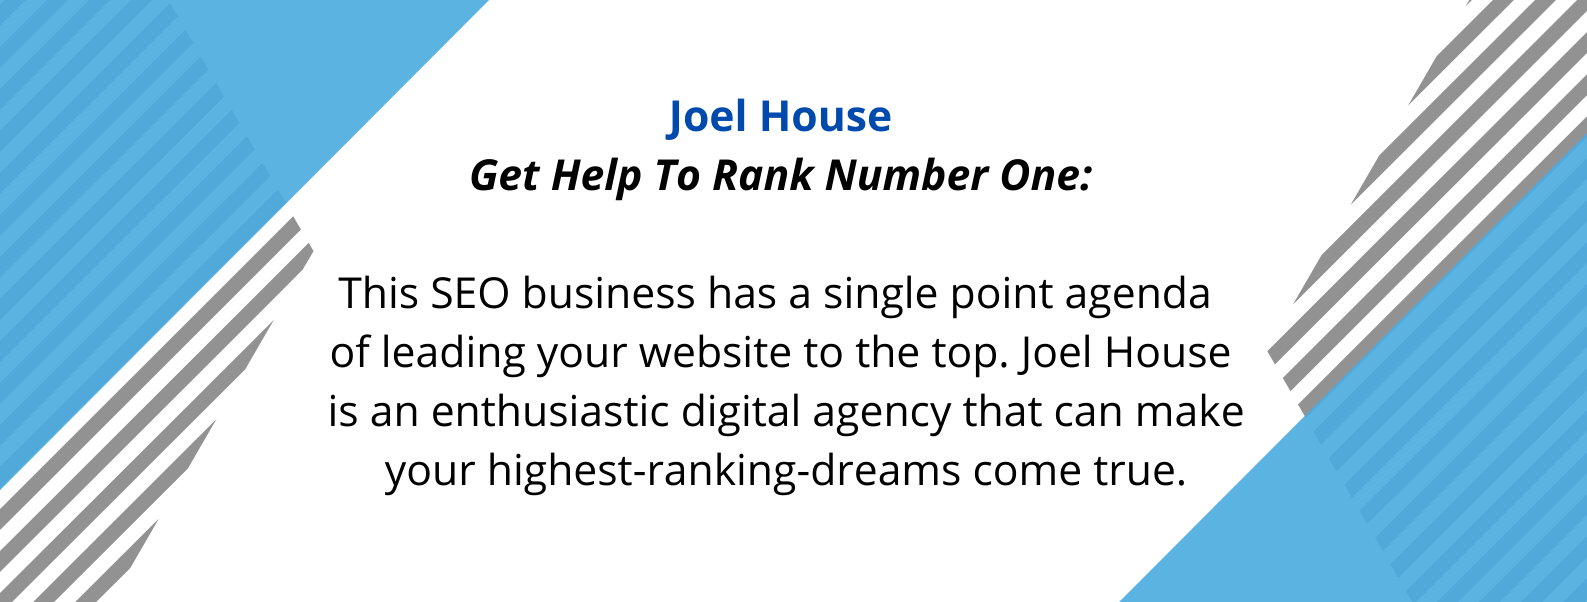 Jowl House’s unique selling proposition.